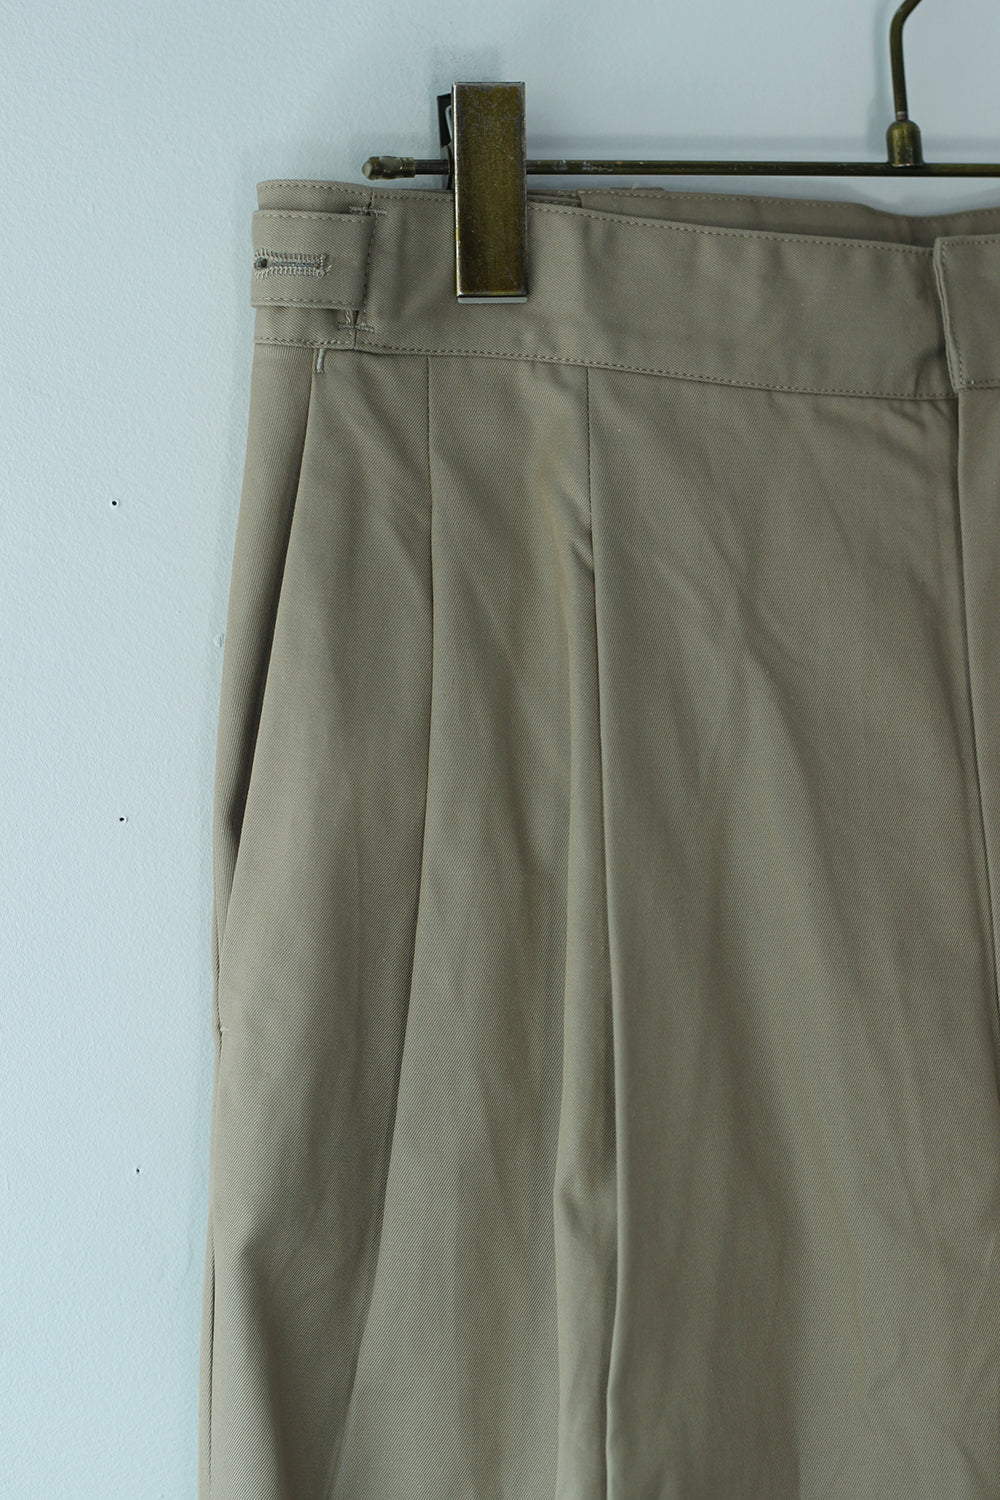 JUN MIKAMI "variable chinos pants" (beige)